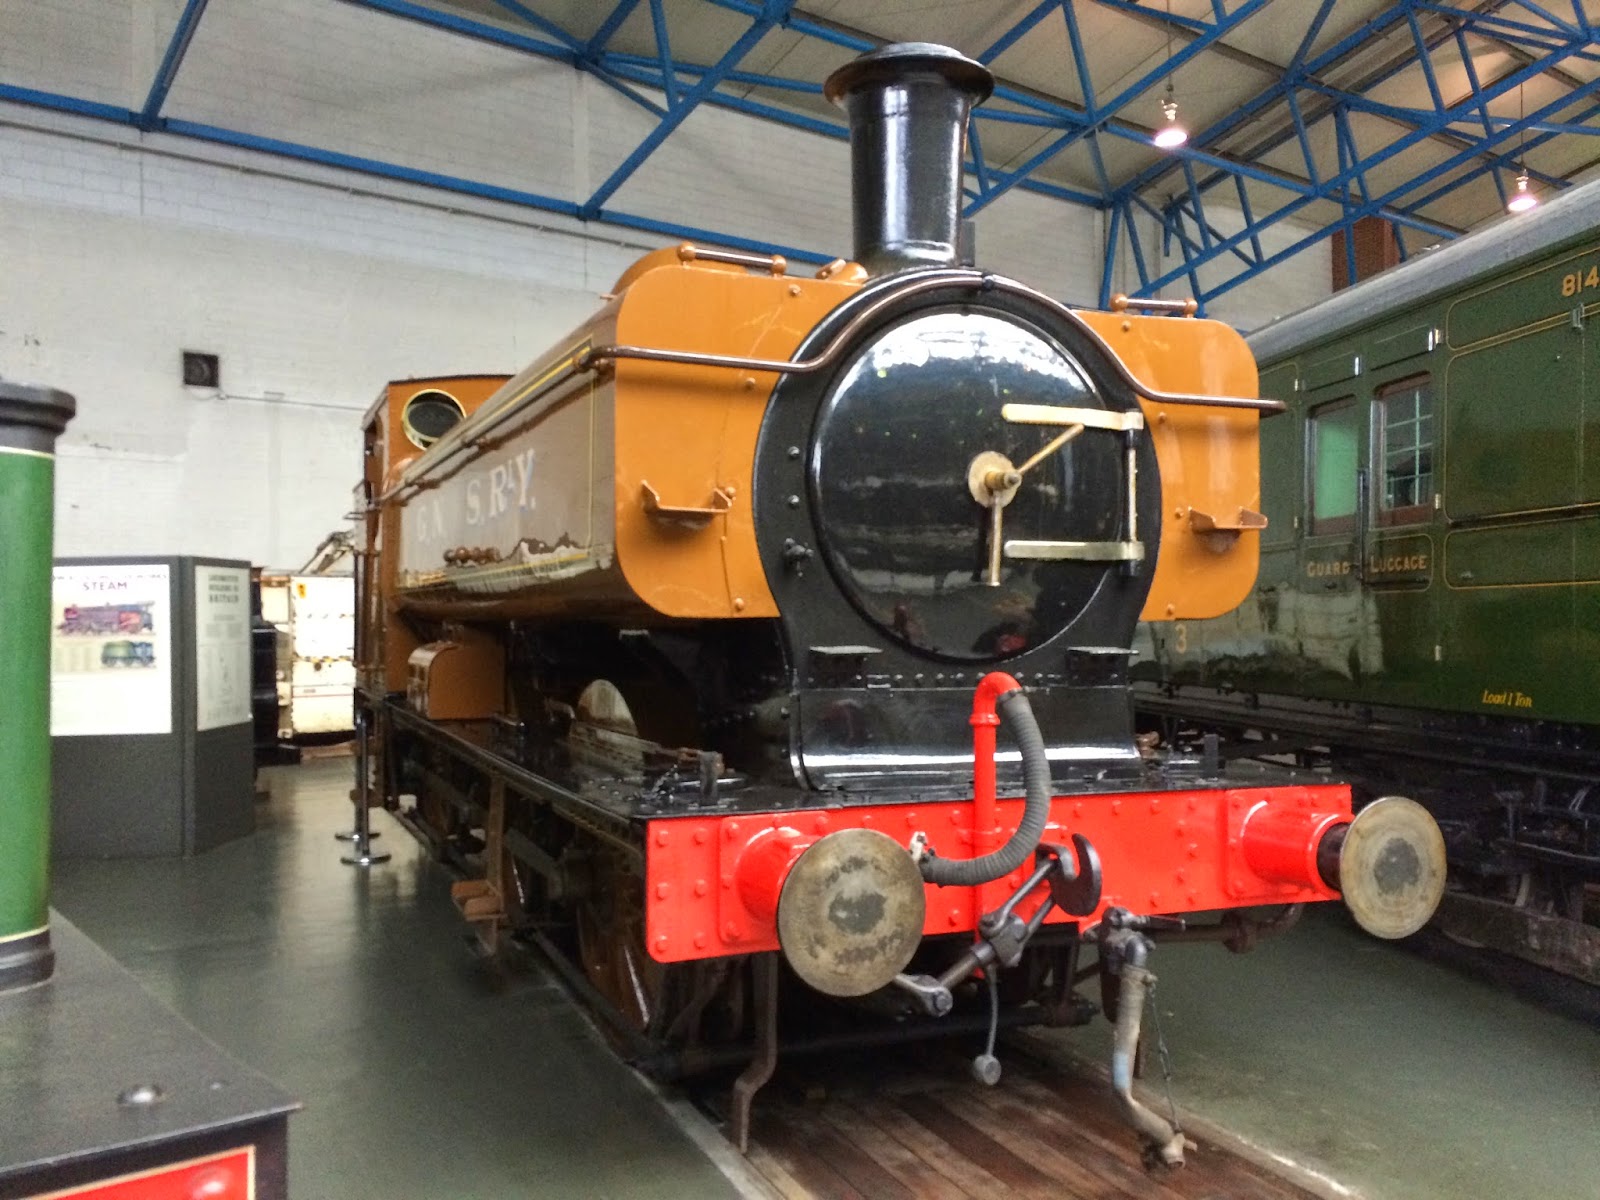 Marumoのブログ ヨーク イギリス国立鉄道博物館に保存されているきかんしゃトーマスのモデル機関車たち